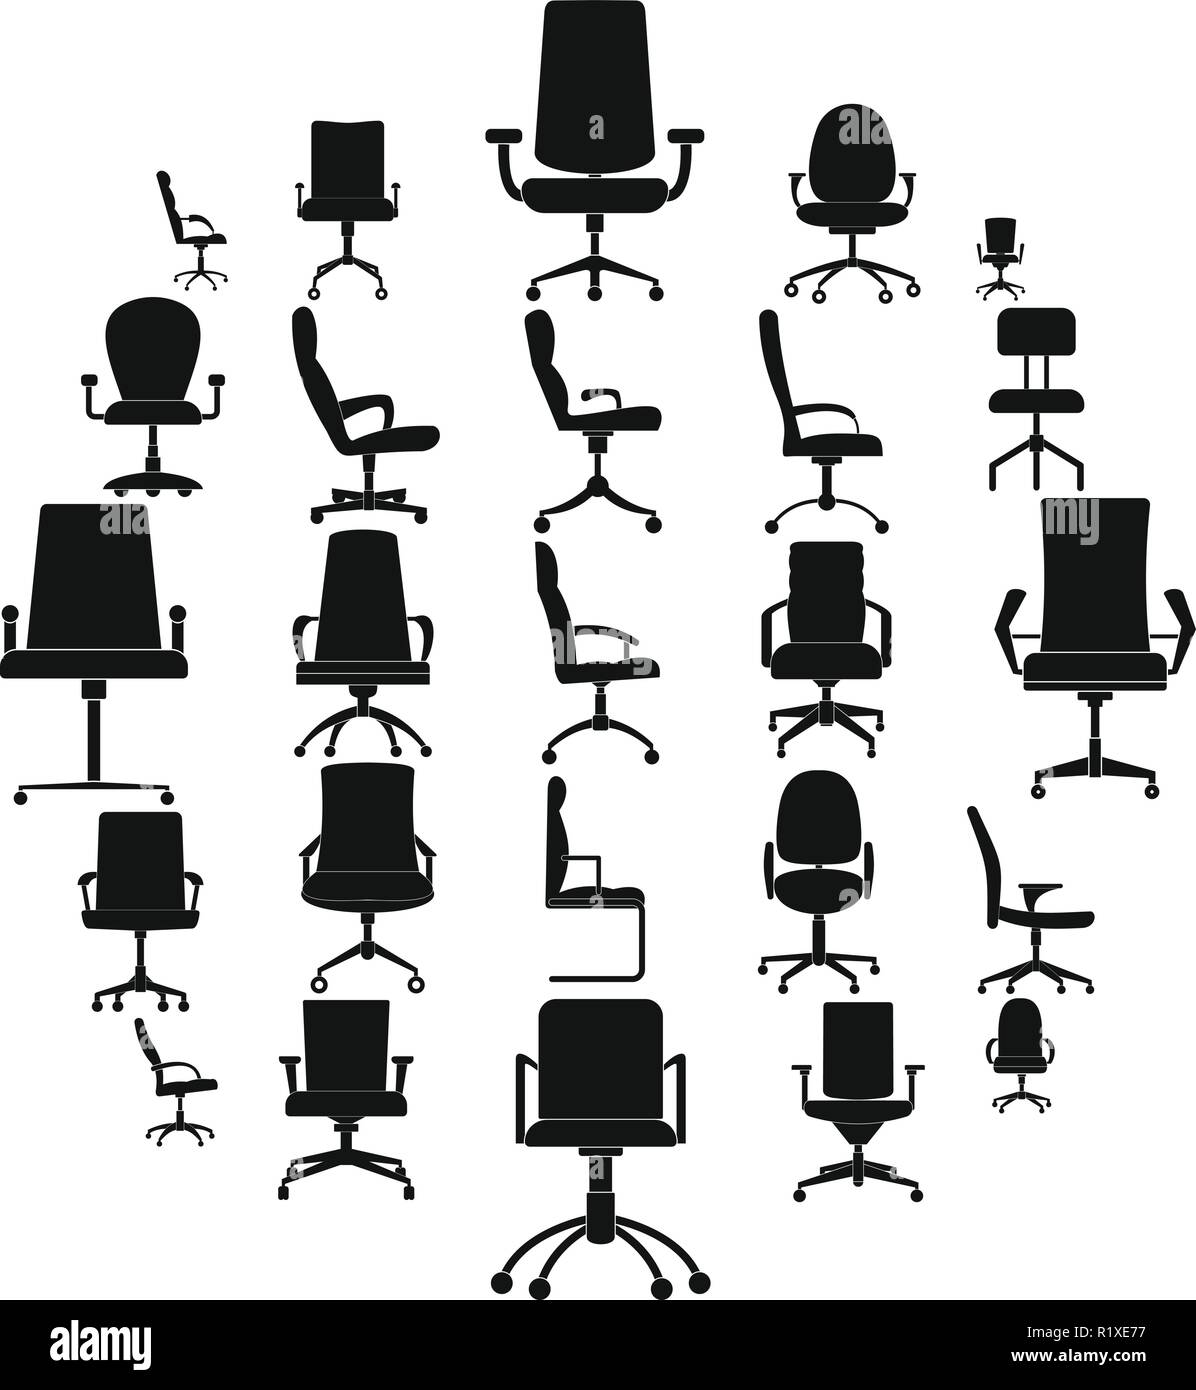 Bürostuhl Symbole gesetzt. Einfache Abbildung von 25 Bürostuhl Vector Icons  für Web Stock-Vektorgrafik - Alamy